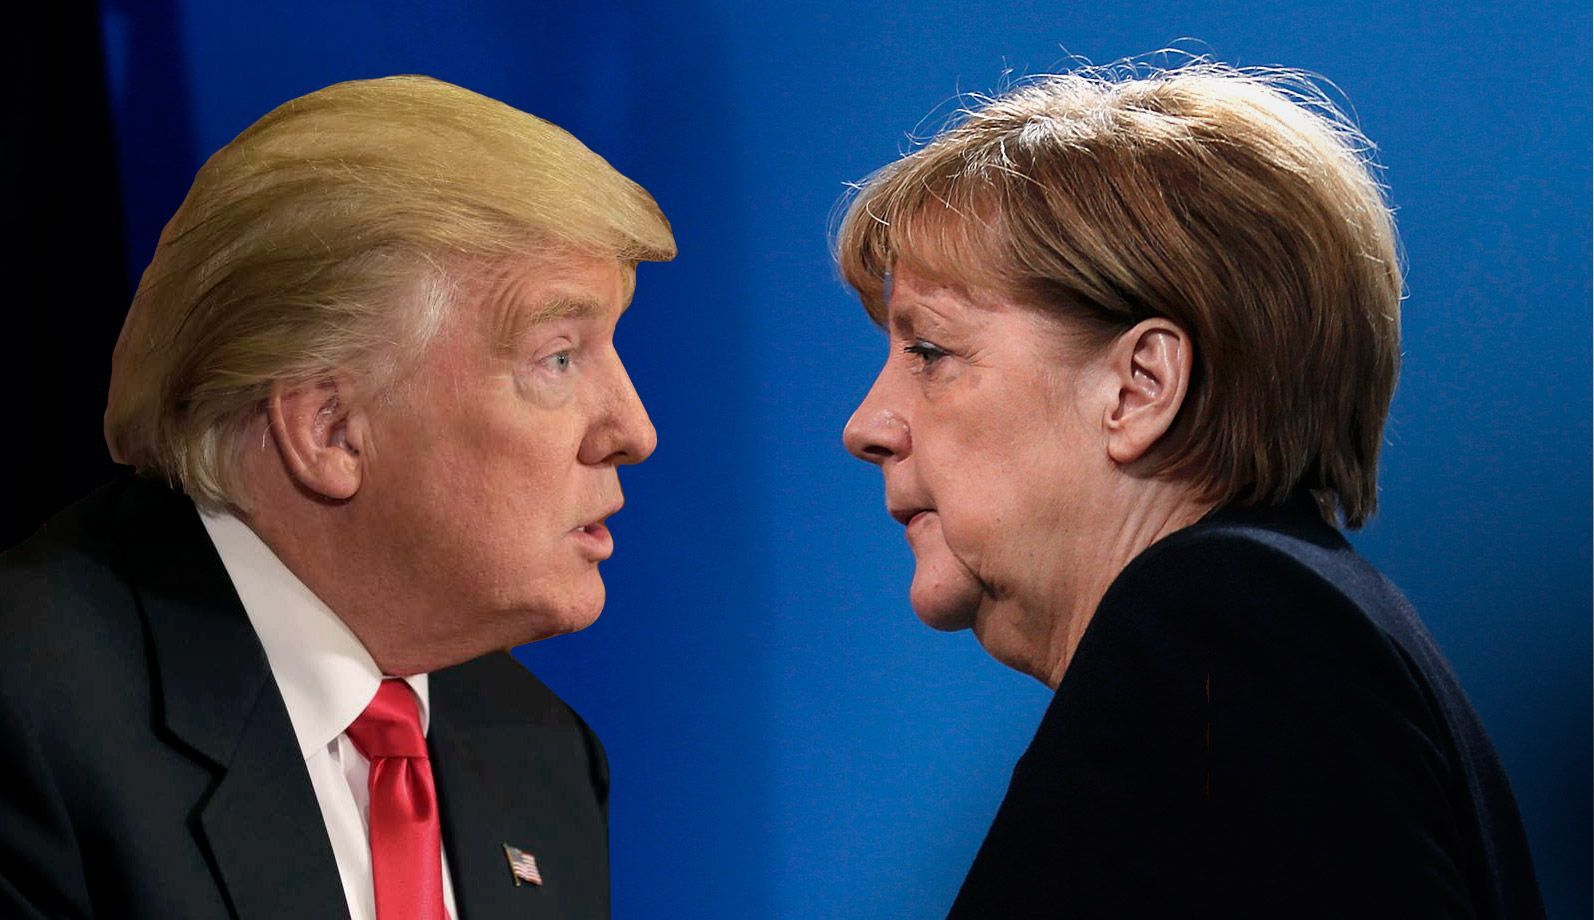 Trump - Merkelová - koláž